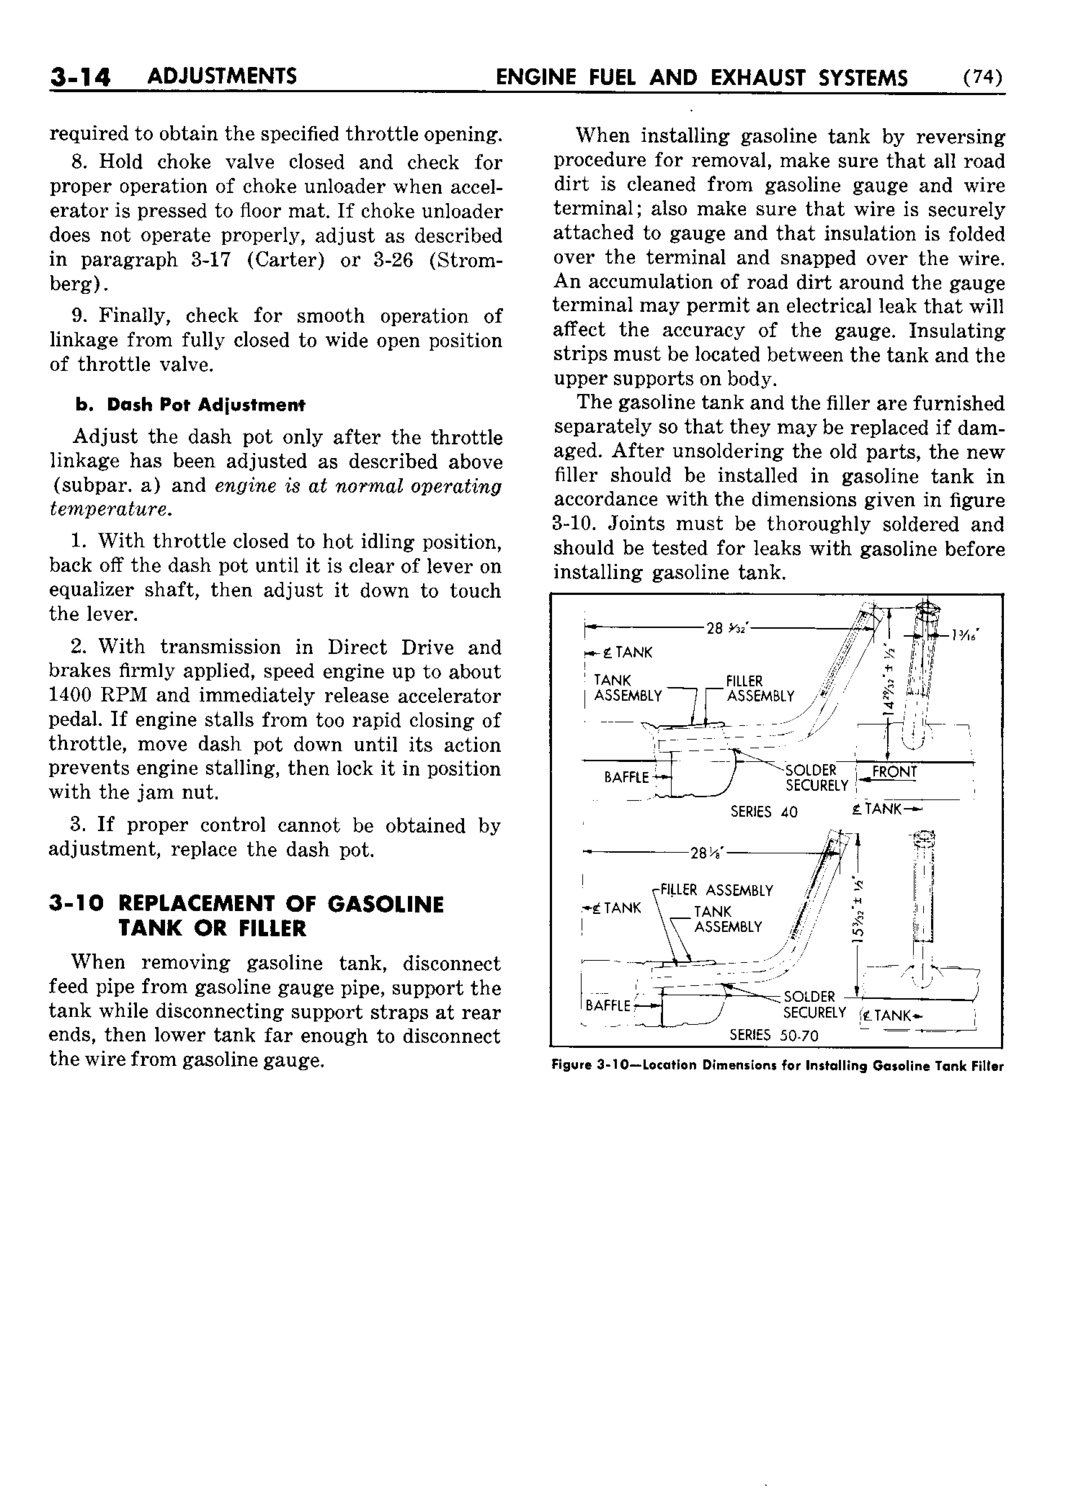 n_04 1953 Buick Shop Manual - Engine Fuel & Exhaust-014-014.jpg